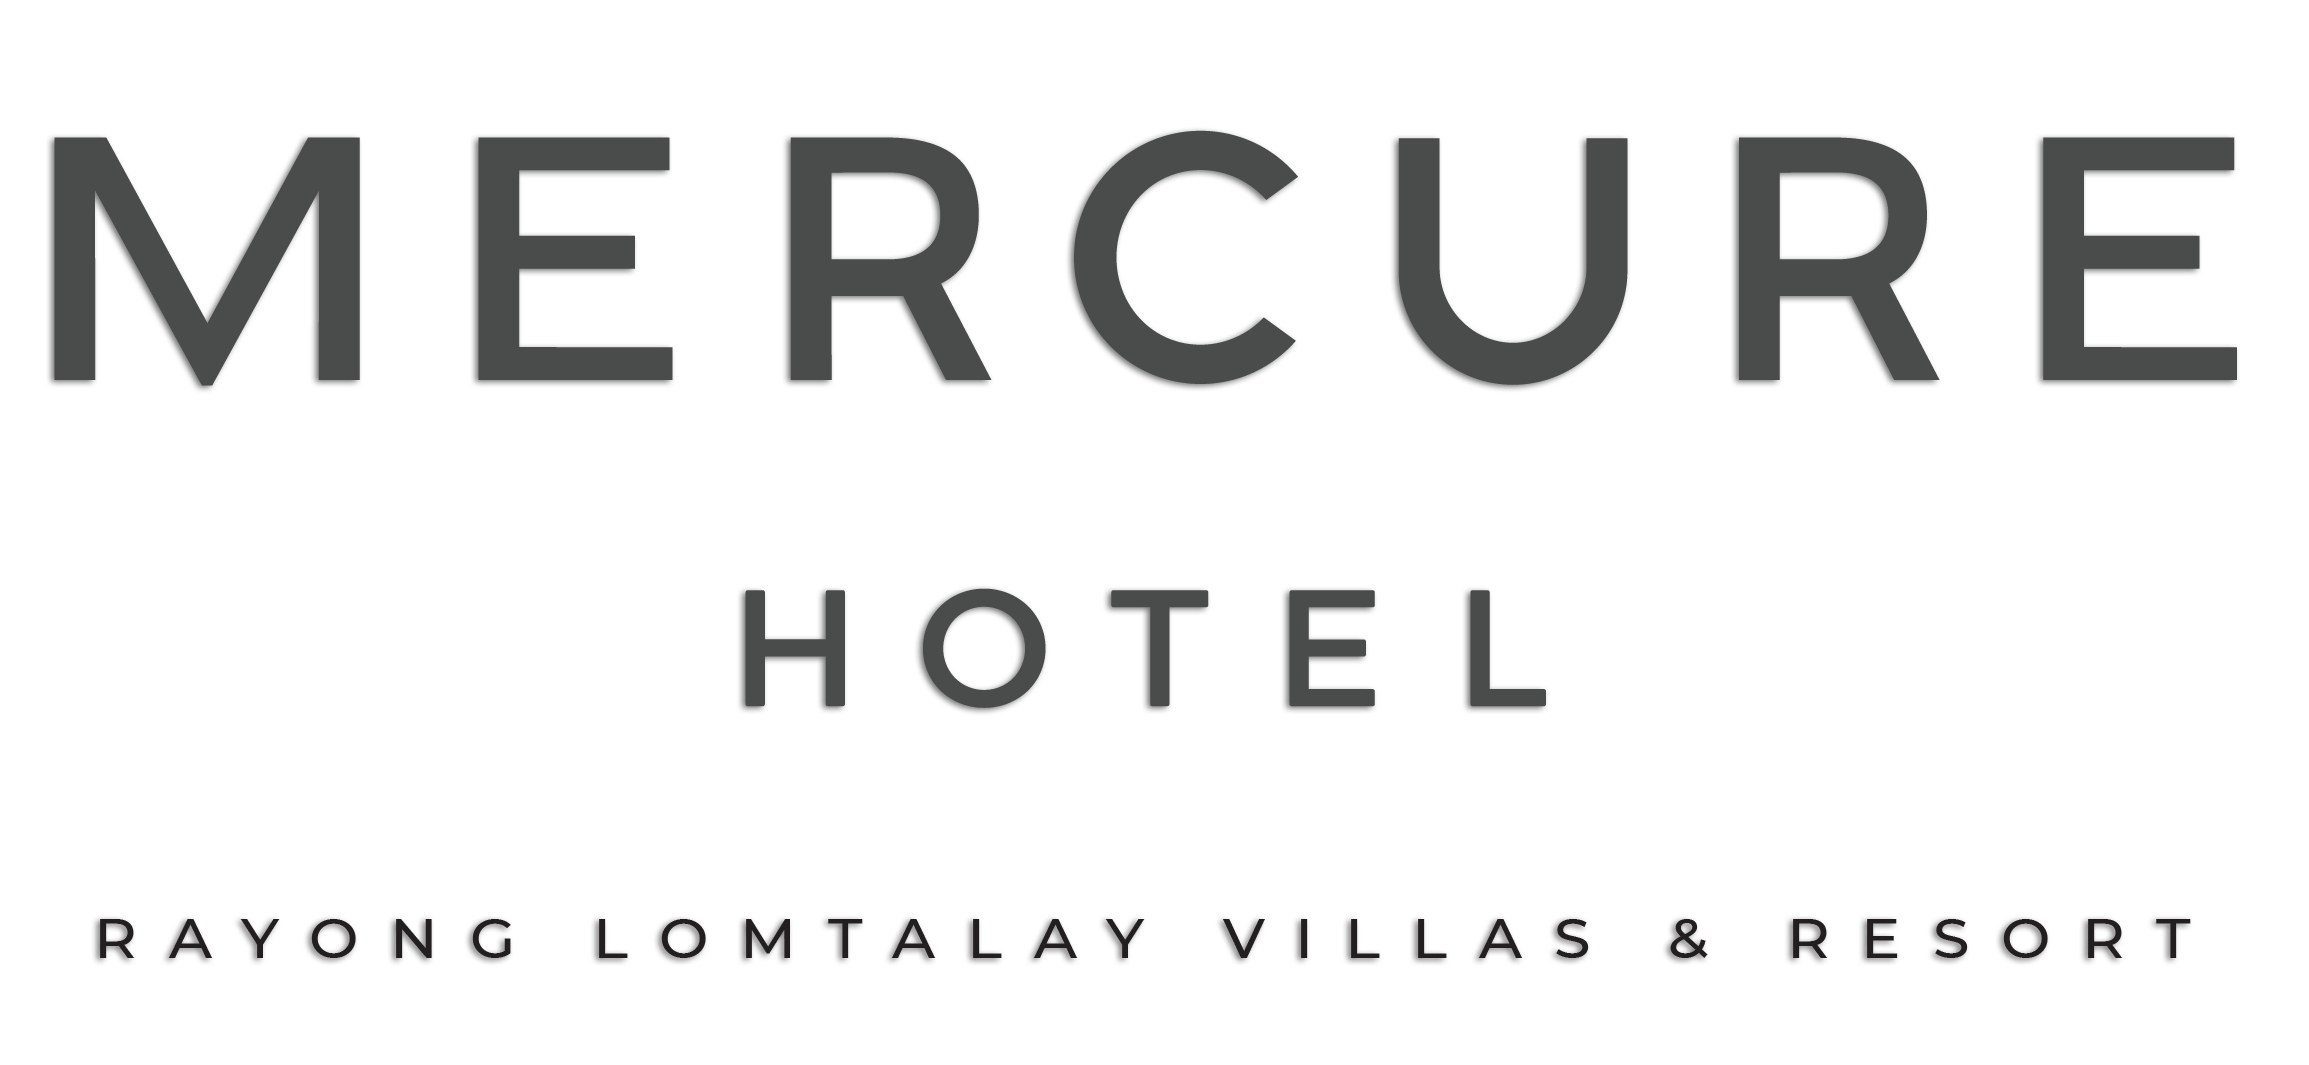 Mercure Rayong Lomtalay Resort